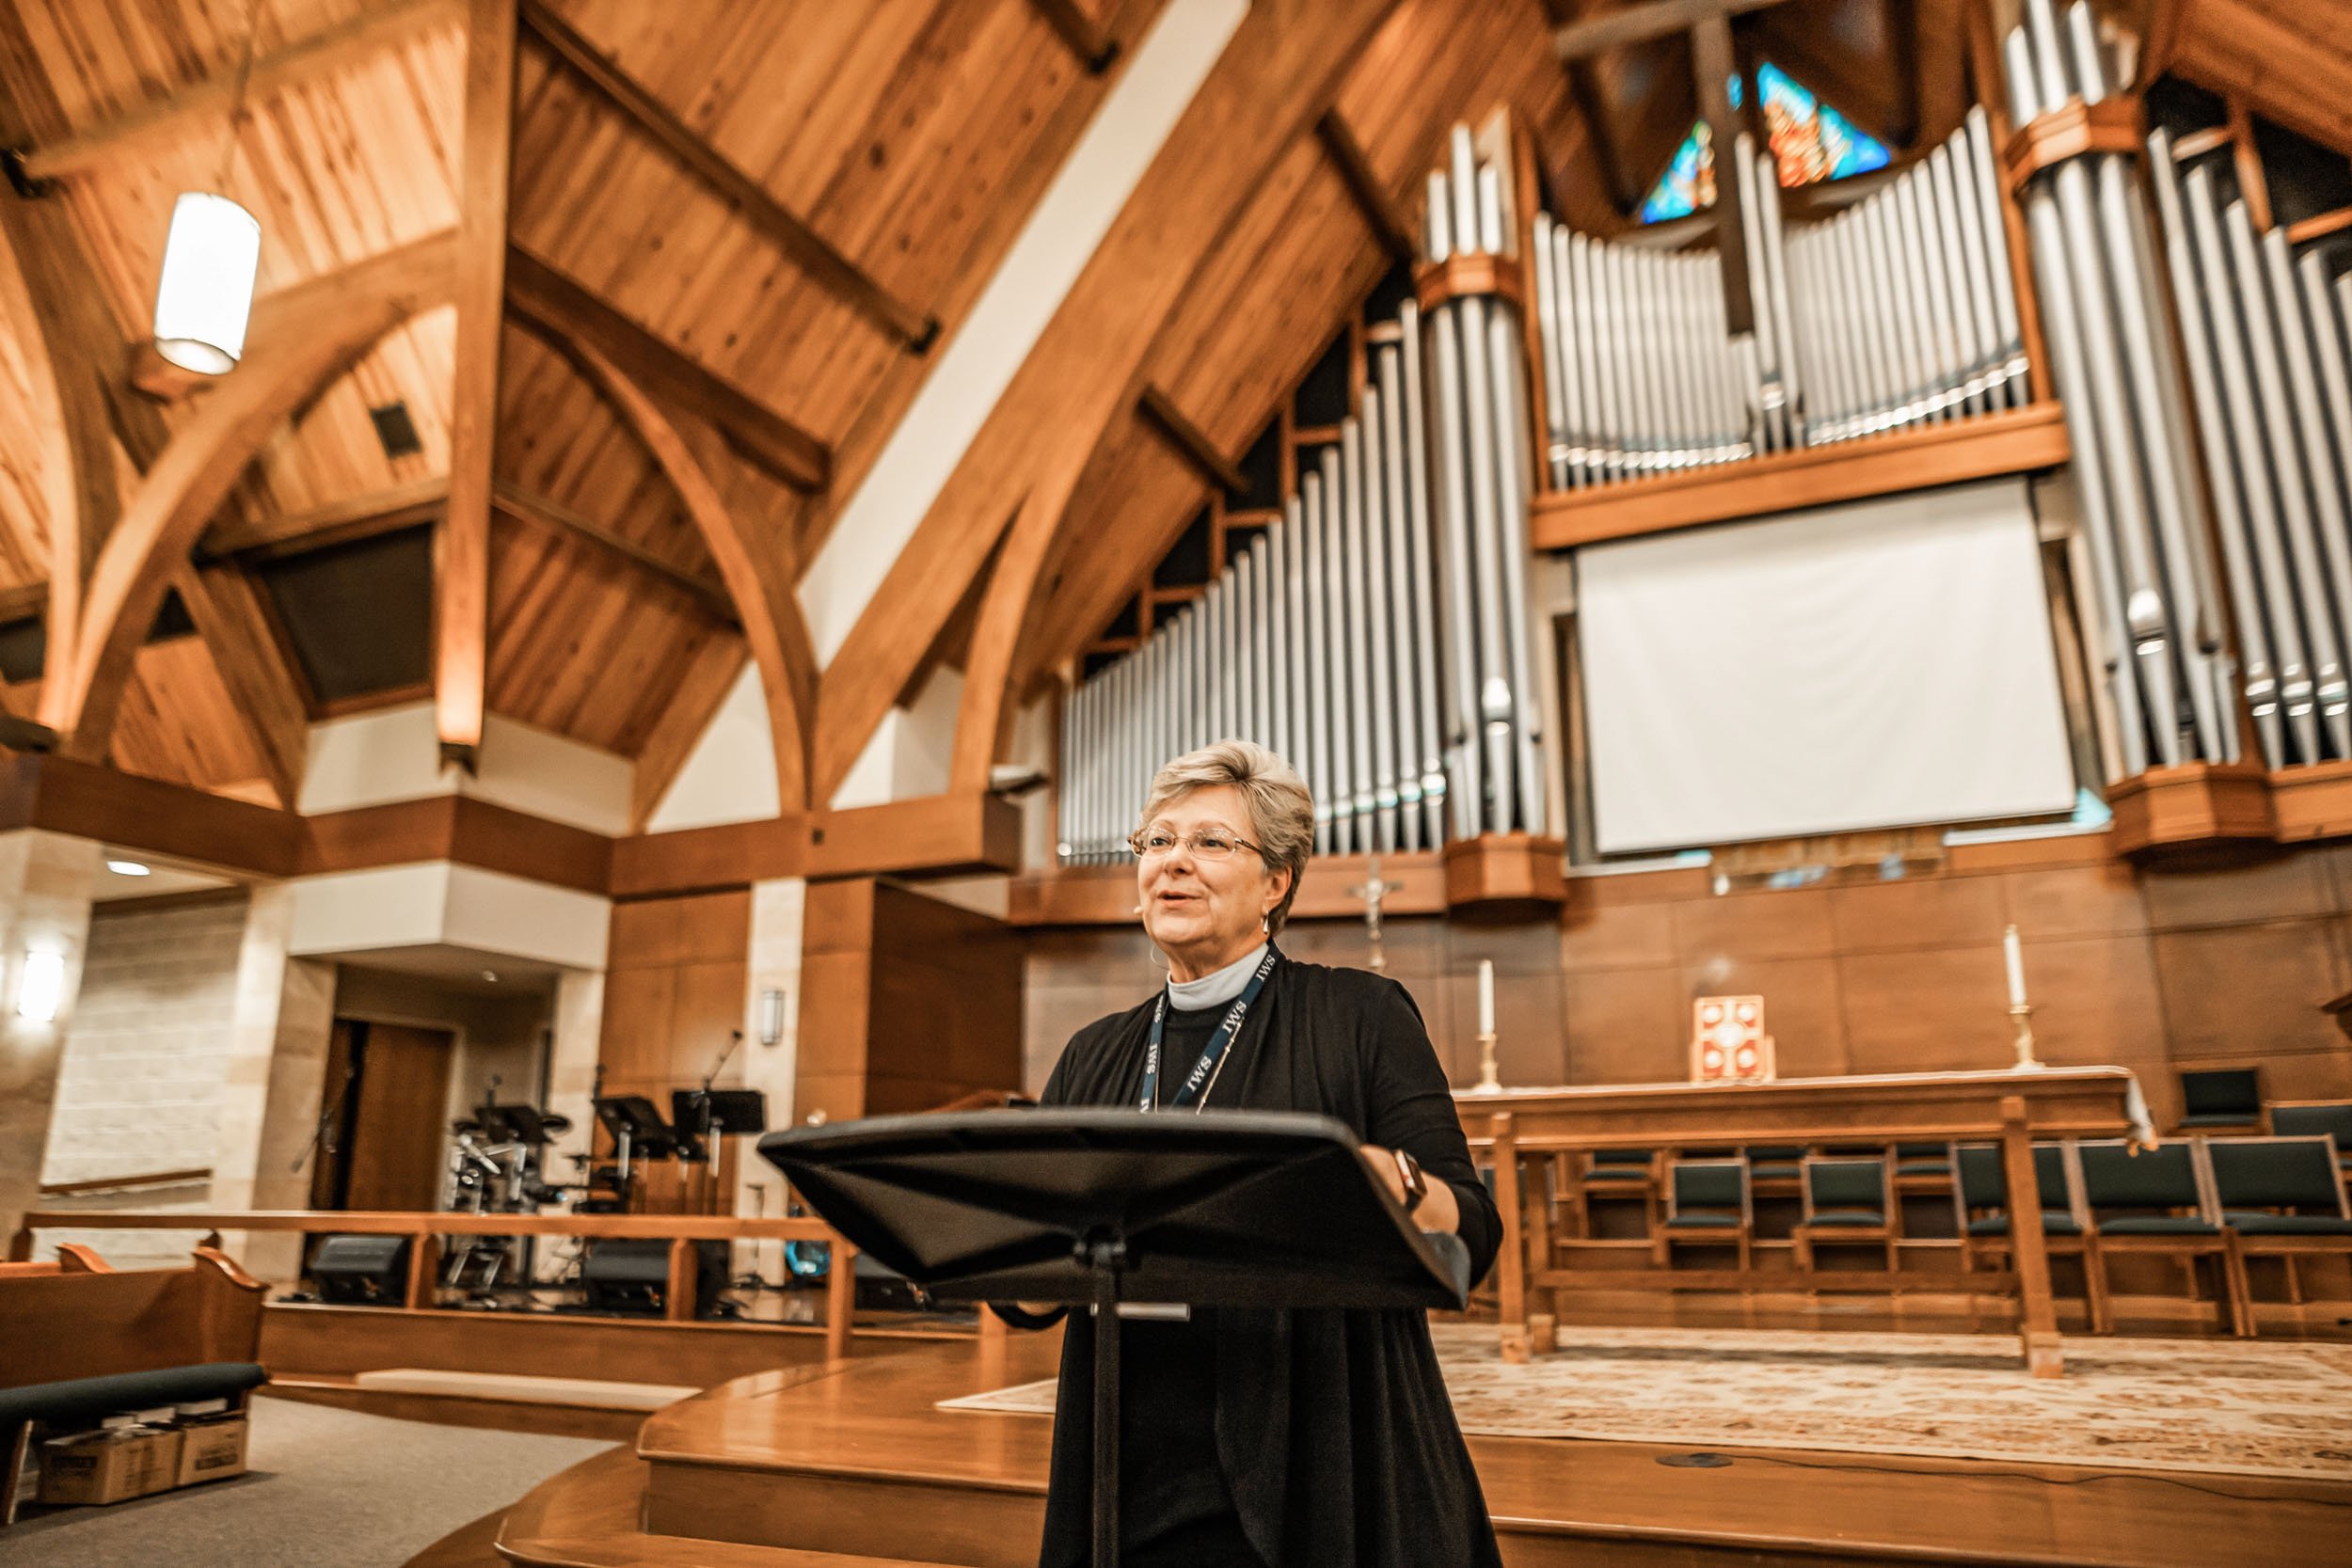 A Message from Rev. Dr. Nancy Nethercott, IWS Chaplain